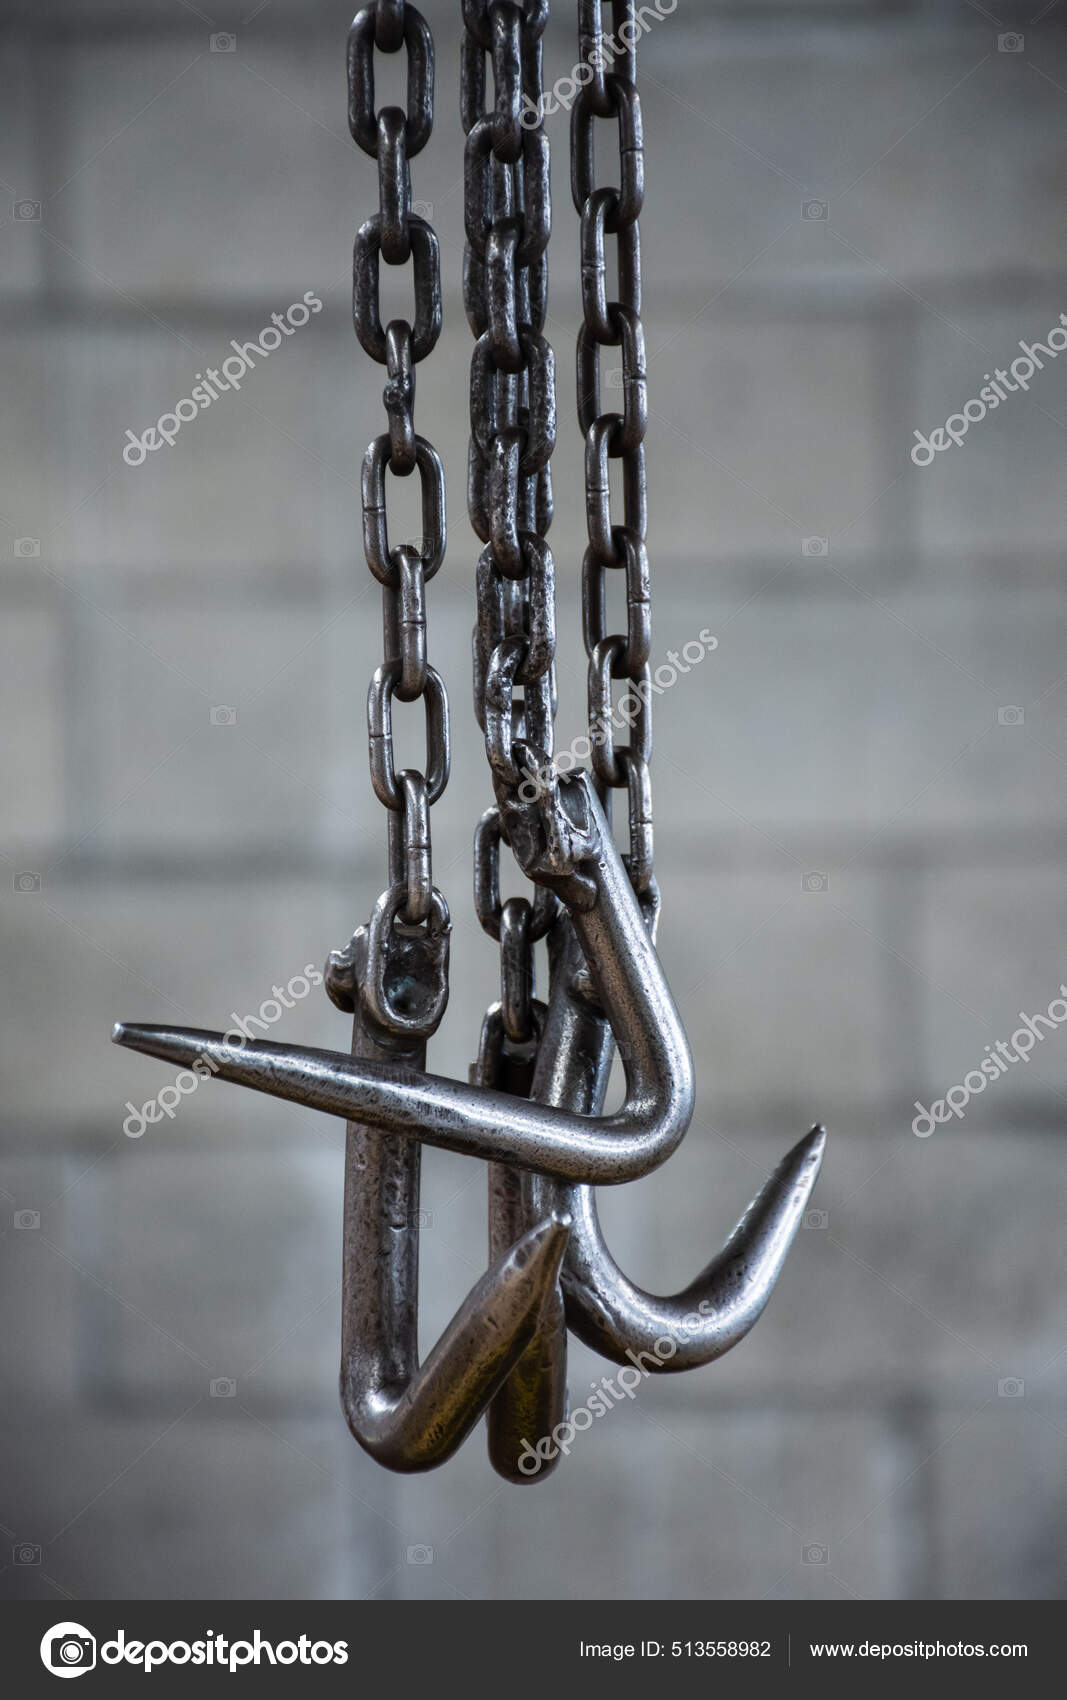 https://st.depositphotos.com/27201292/51355/i/1600/depositphotos_513558982-stock-photo-vertical-shot-metal-hooks-hanging.jpg